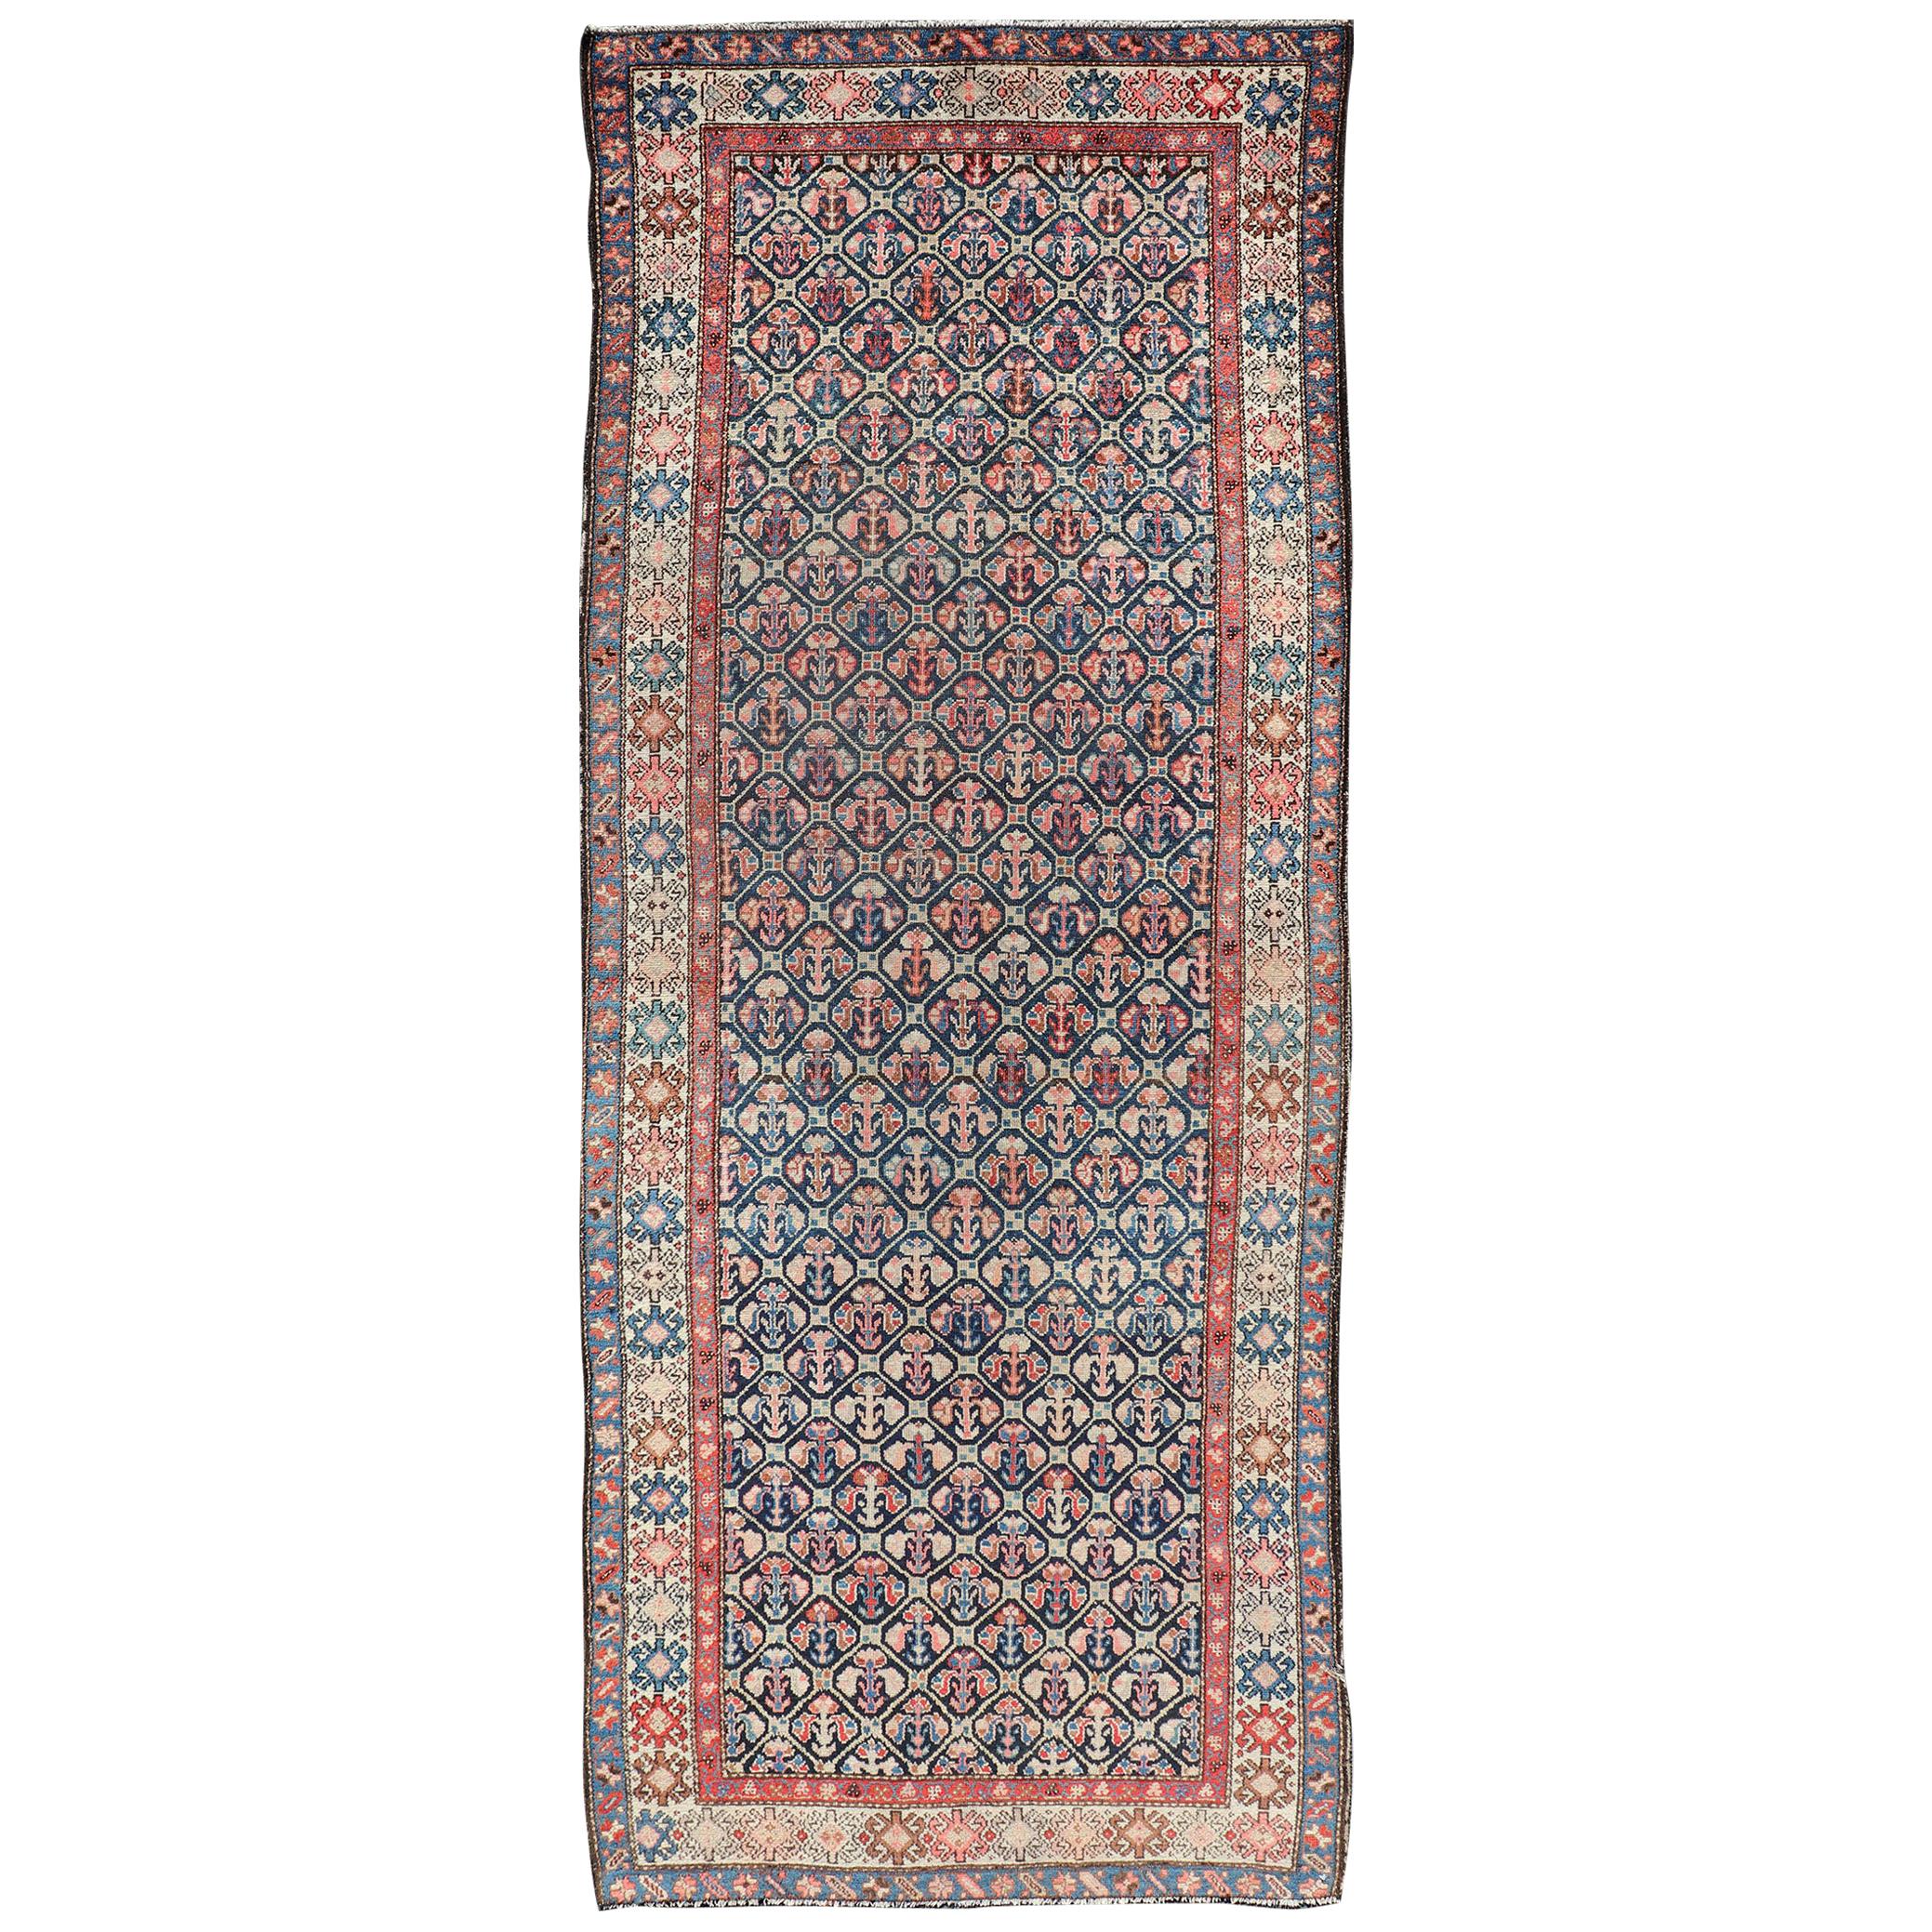 Tapis persan ancien tribal Hamedan en bleu, rouge, marron et ivoire